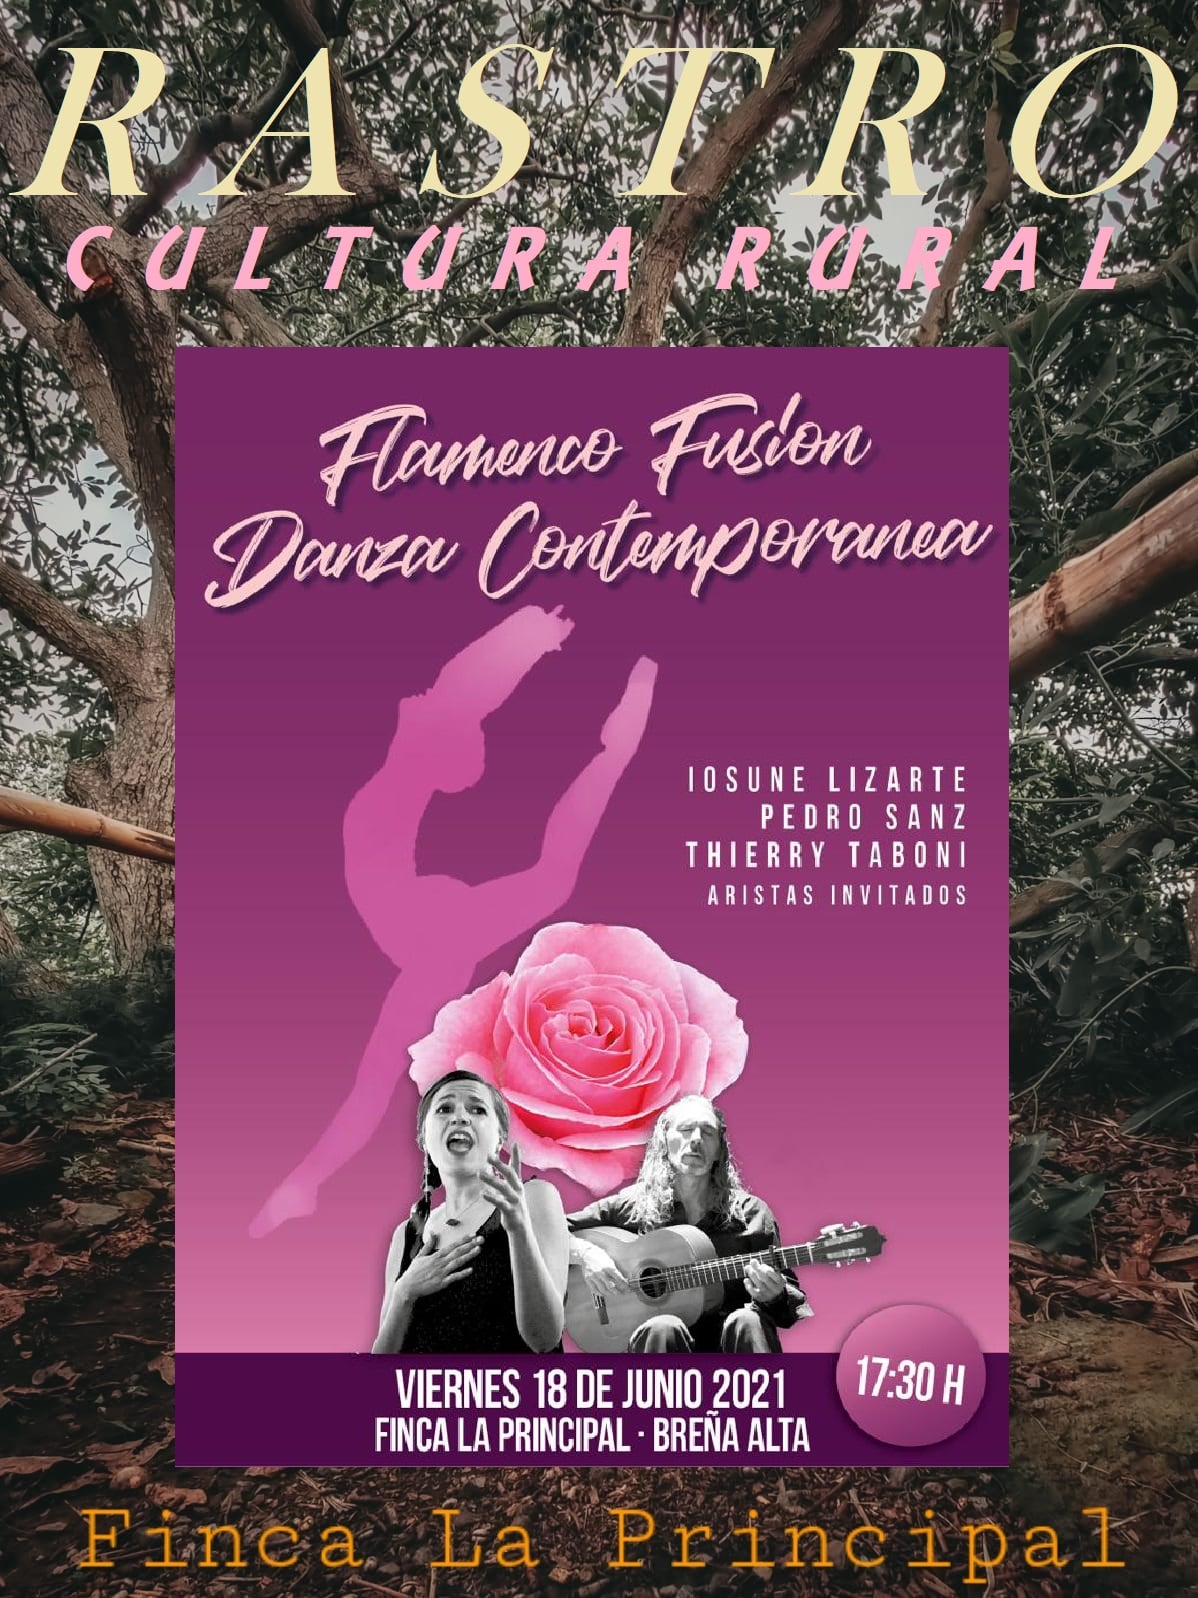 18-06-2021-finca-la-principal-flamenco